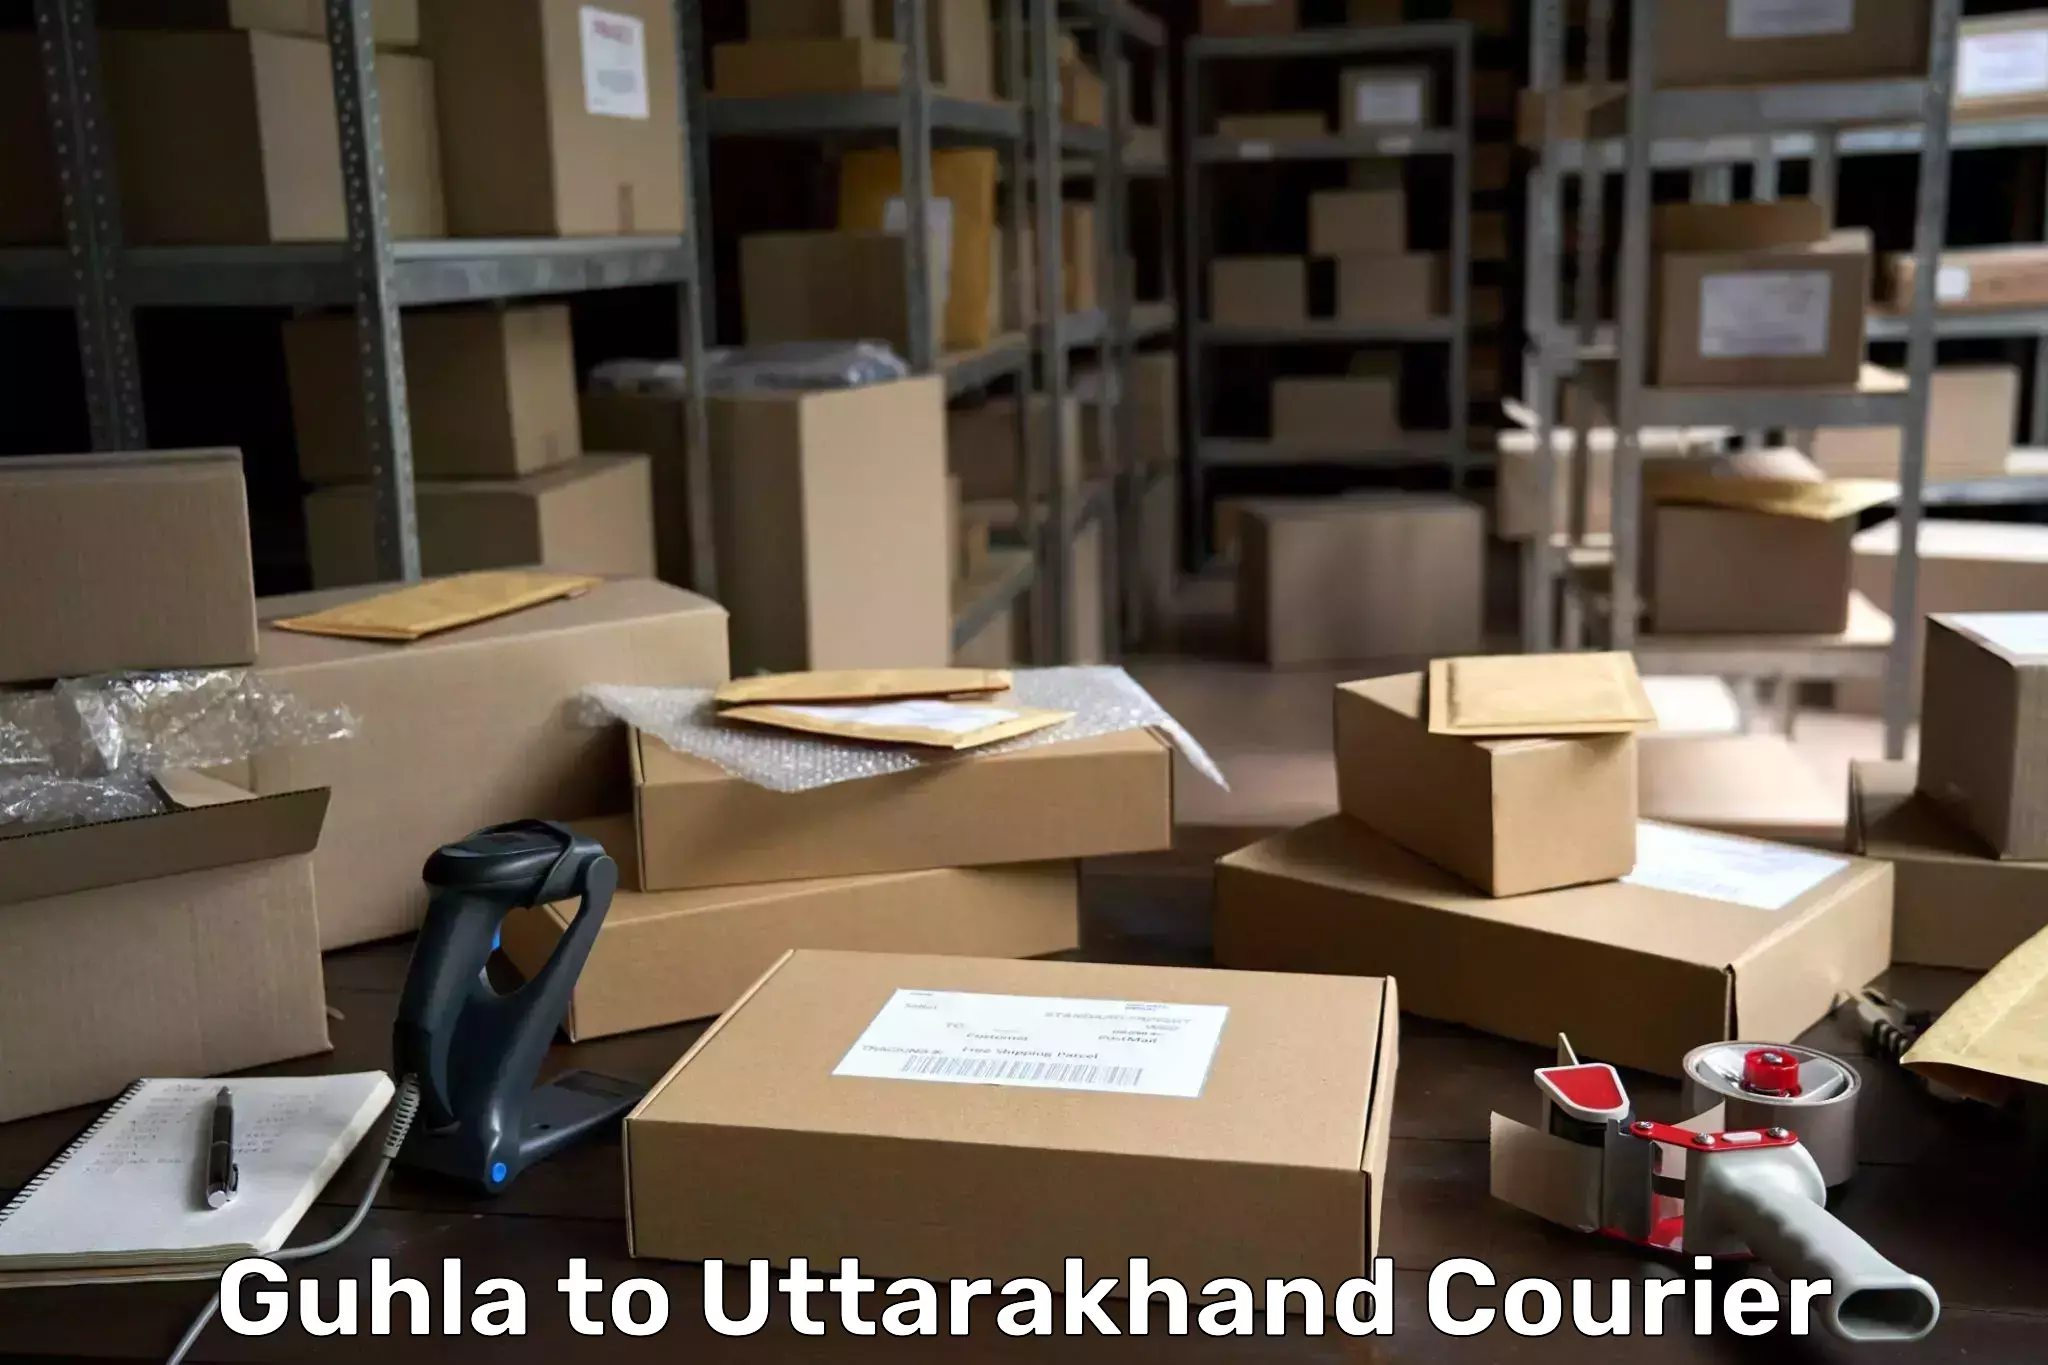 Courier service comparison Guhla to Uttarakhand